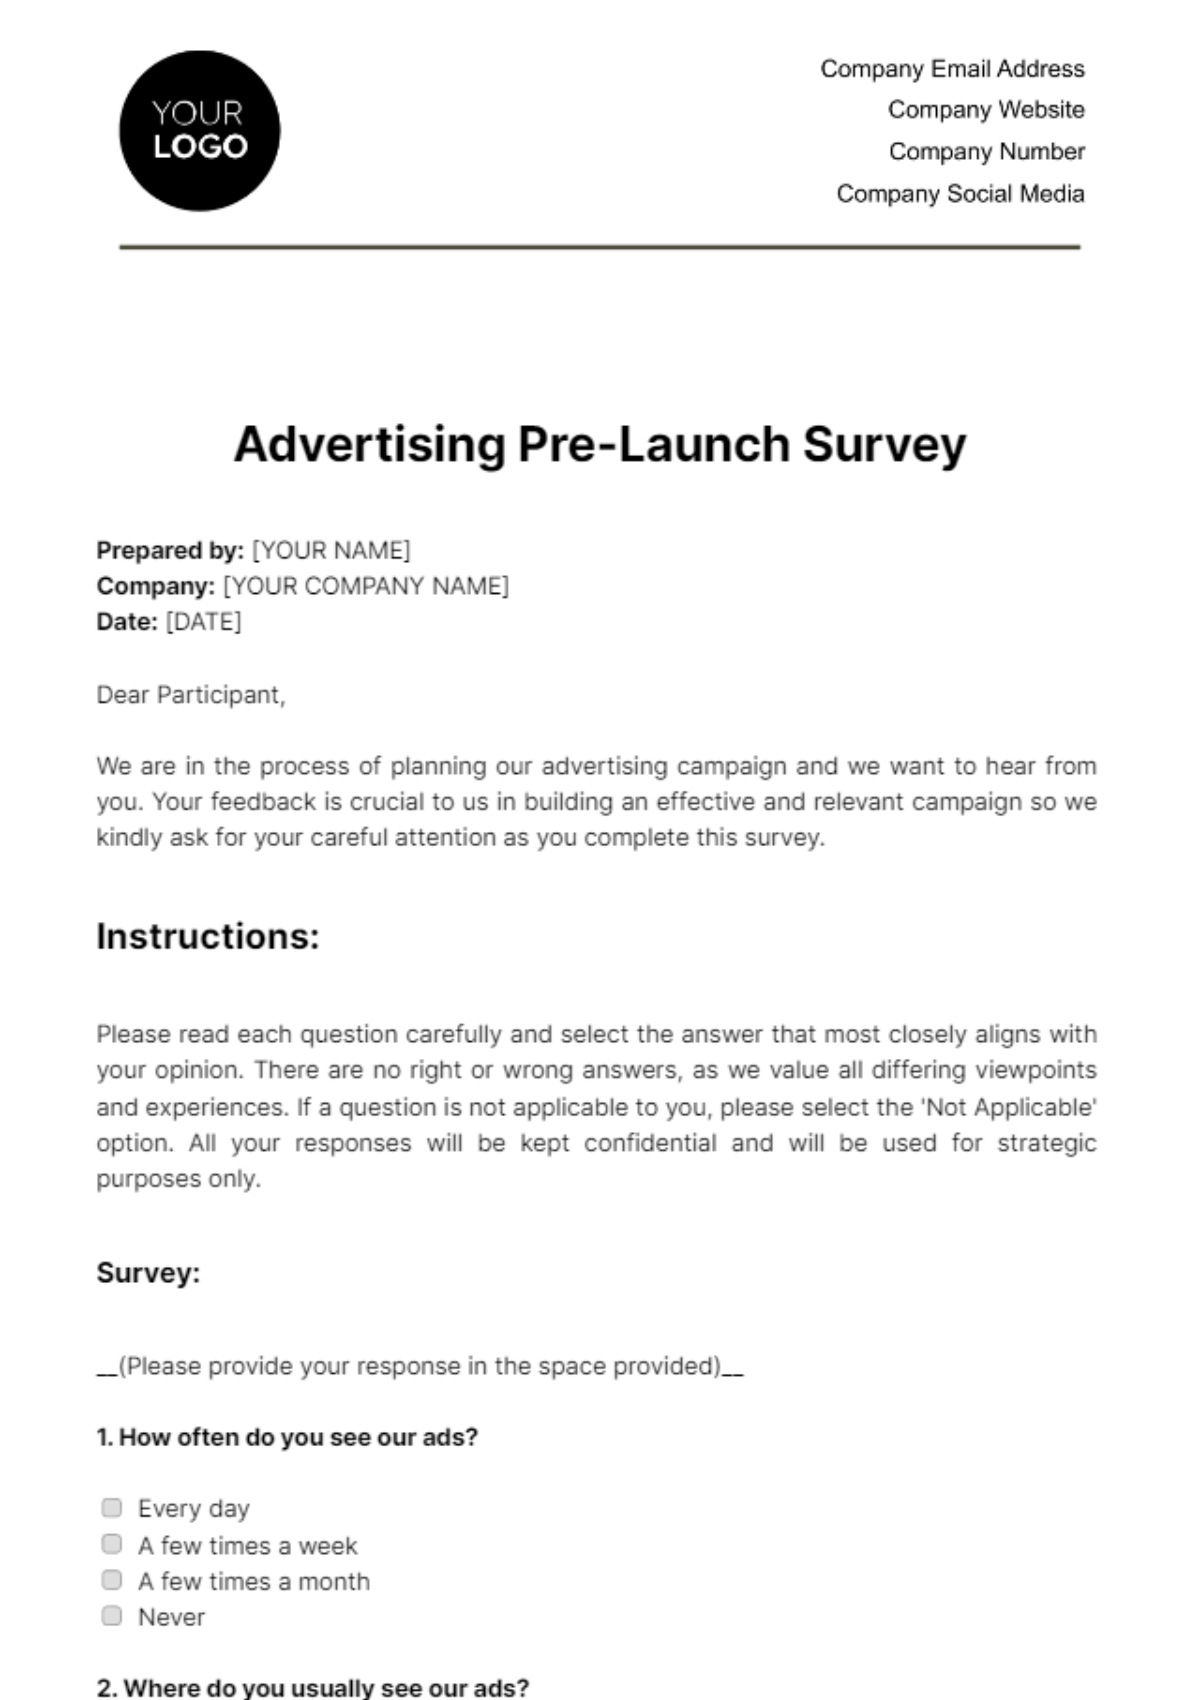 Advertising Pre-Launch Survey Template